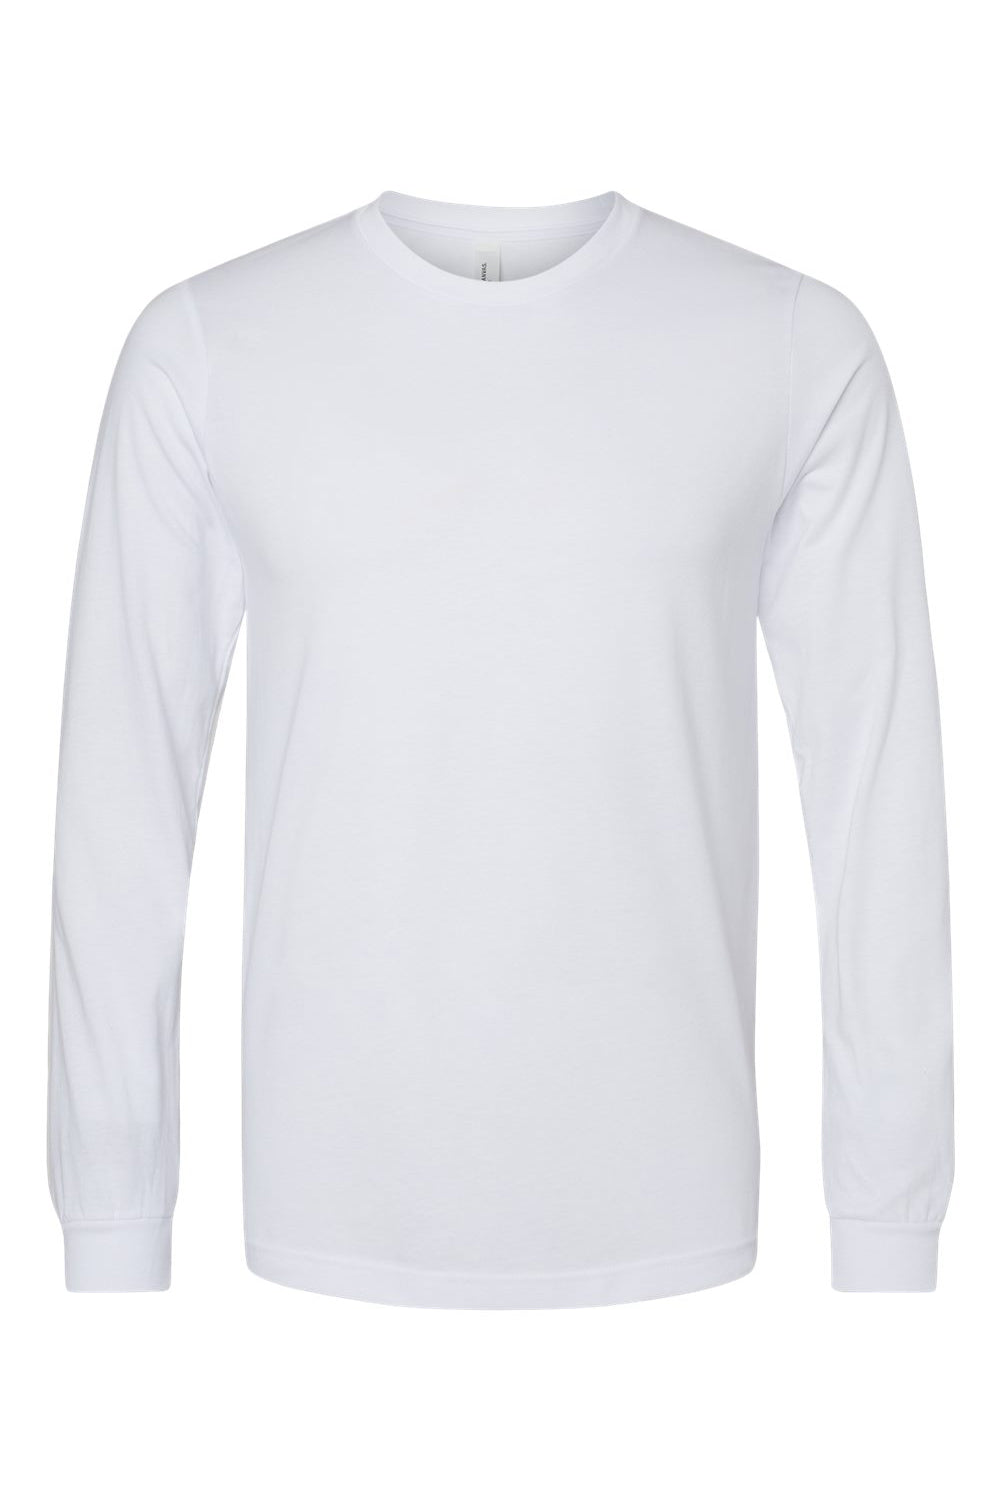 Bella + Canvas BC3501CVC Mens CVC Long Sleeve Crewneck T-Shirt Solid White Flat Front